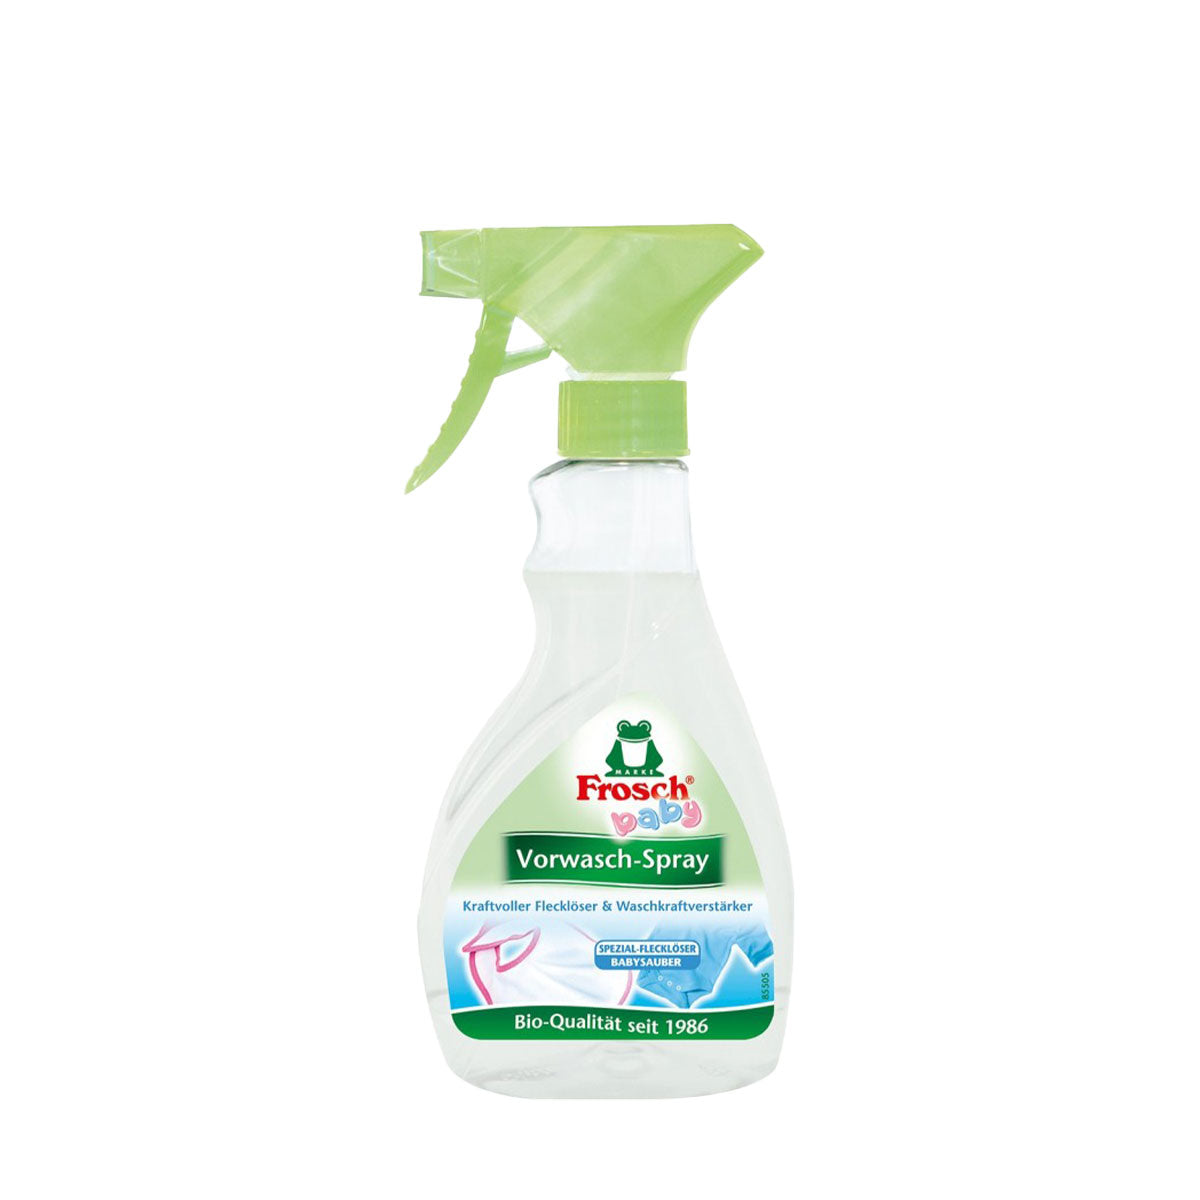 Spray quita manchas pre-lavado para ropa de bebés Frosch 300 ml - Producto Ecológico